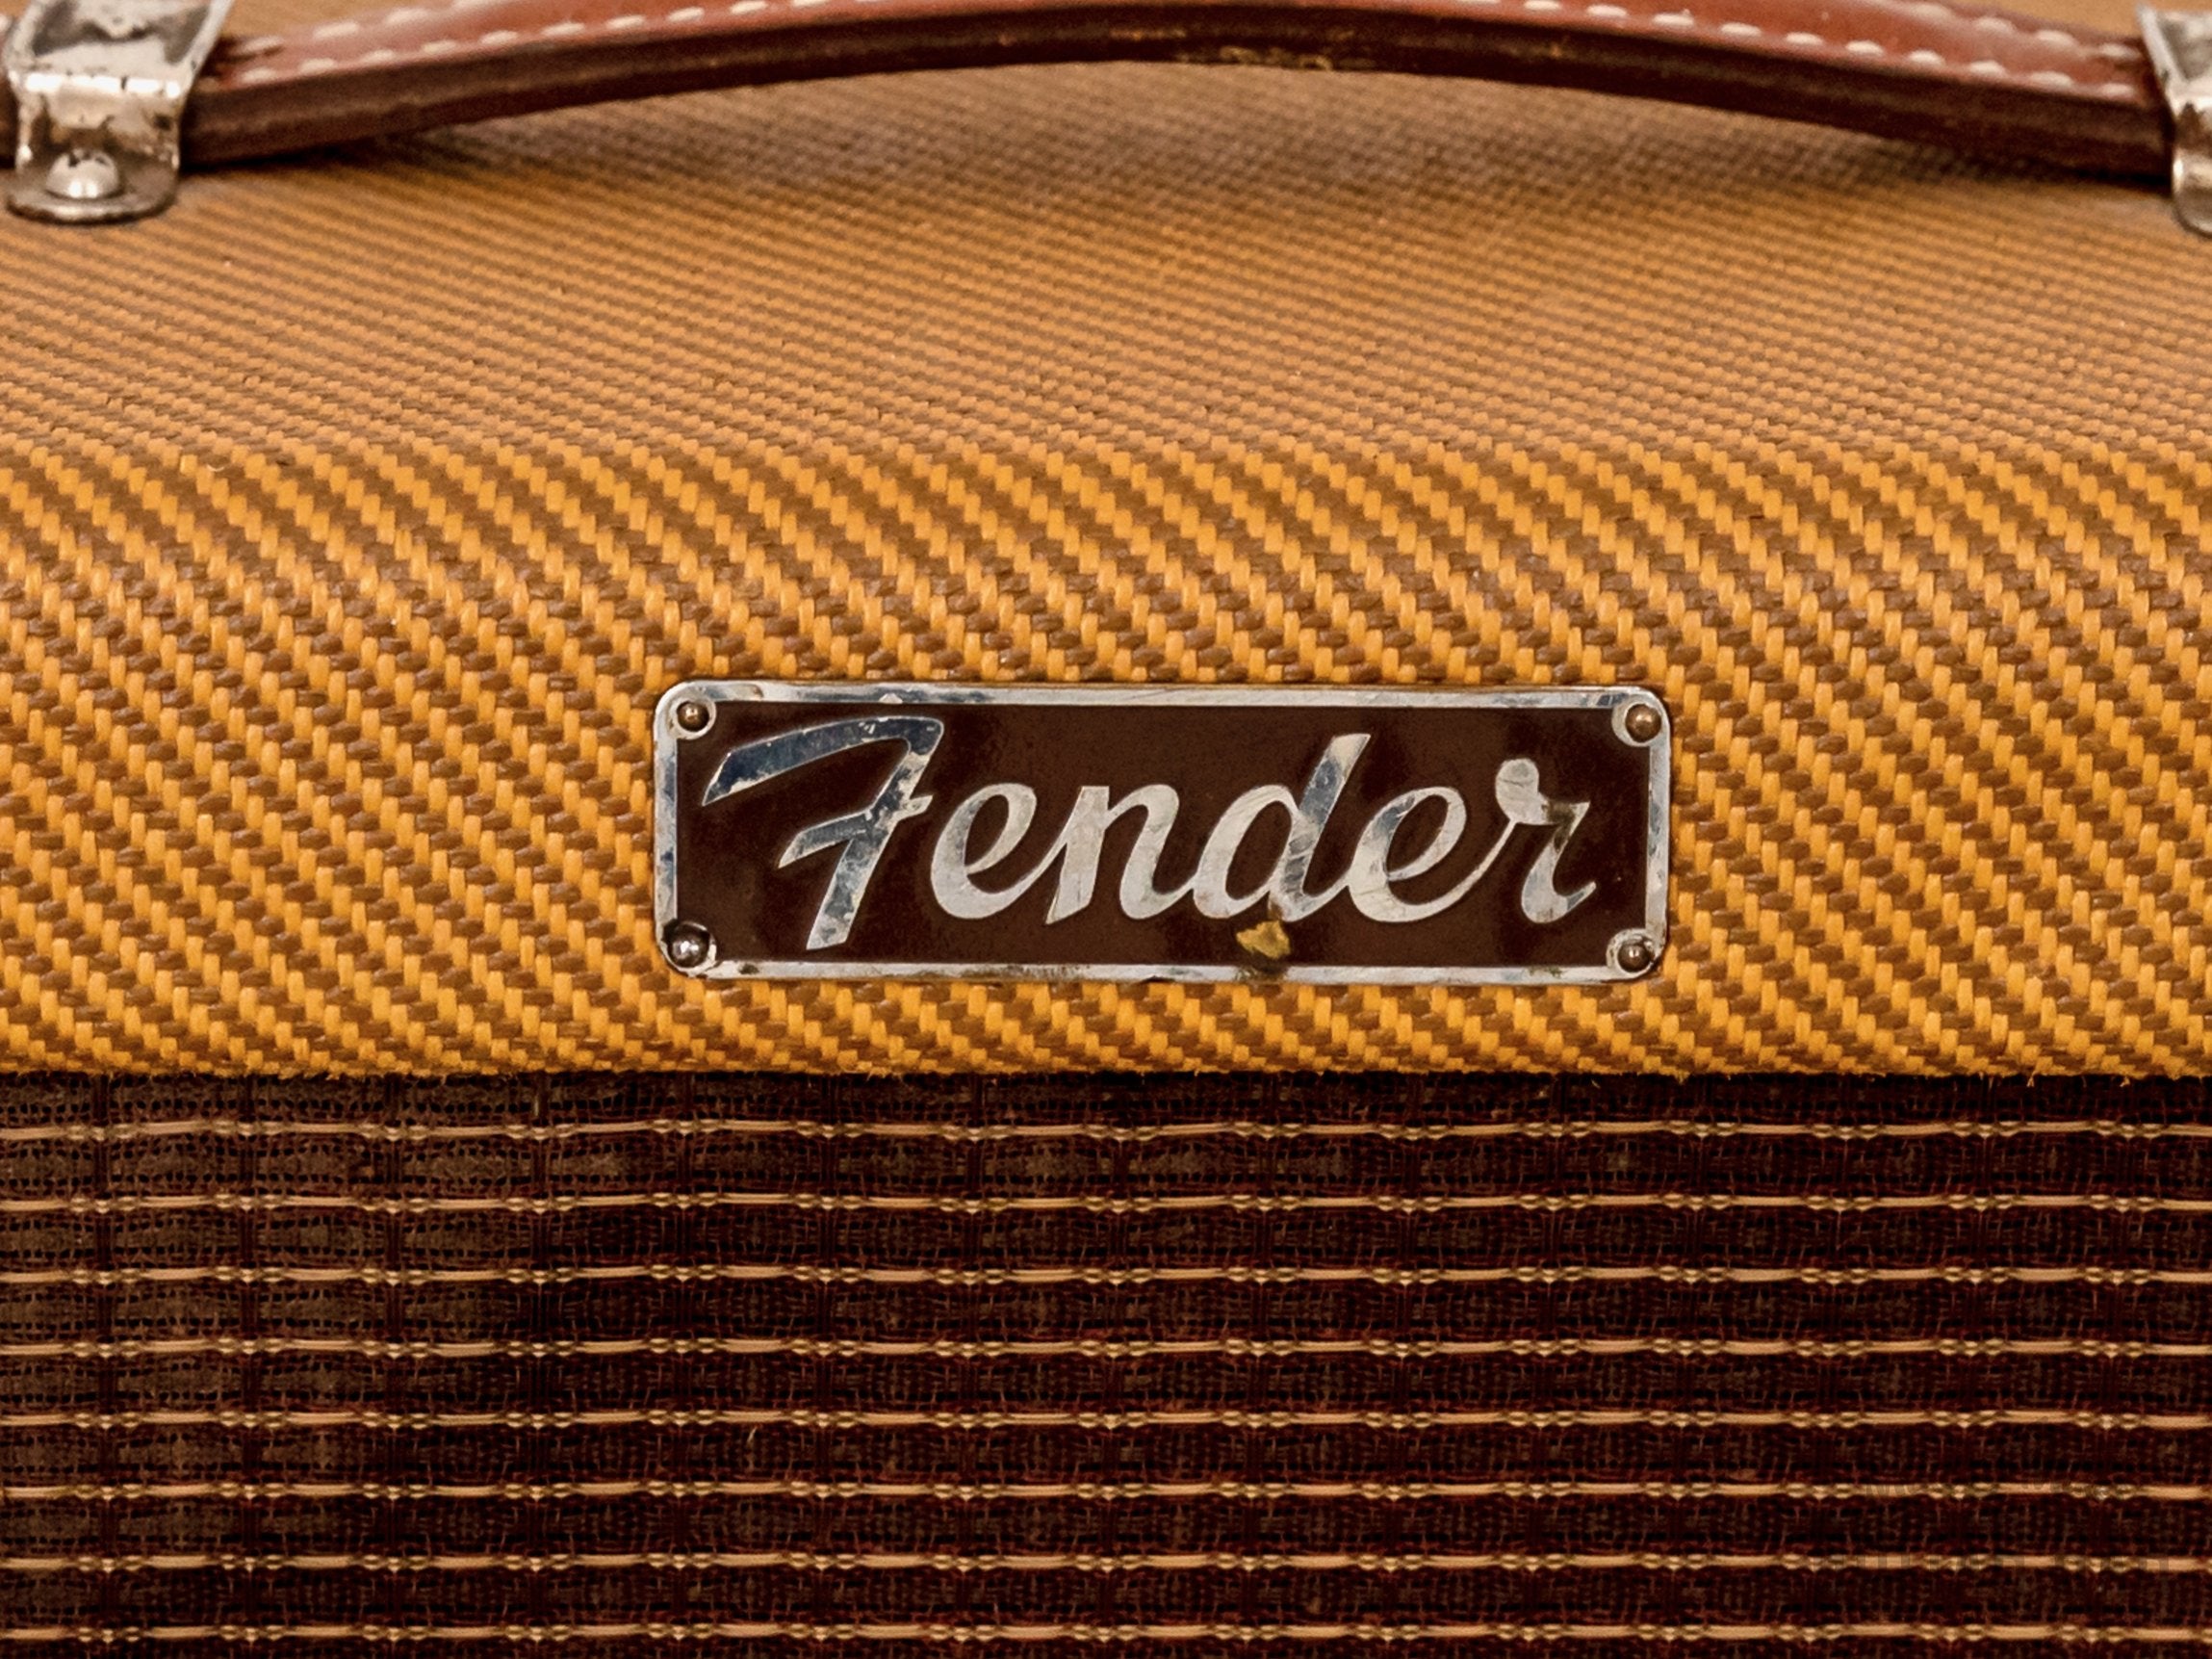 1955 Fender Super Narrow Panel Tweed 5E4 Vintage Tube Amp 2x10 w/ Jensen P10Q, 6V6 Tubes